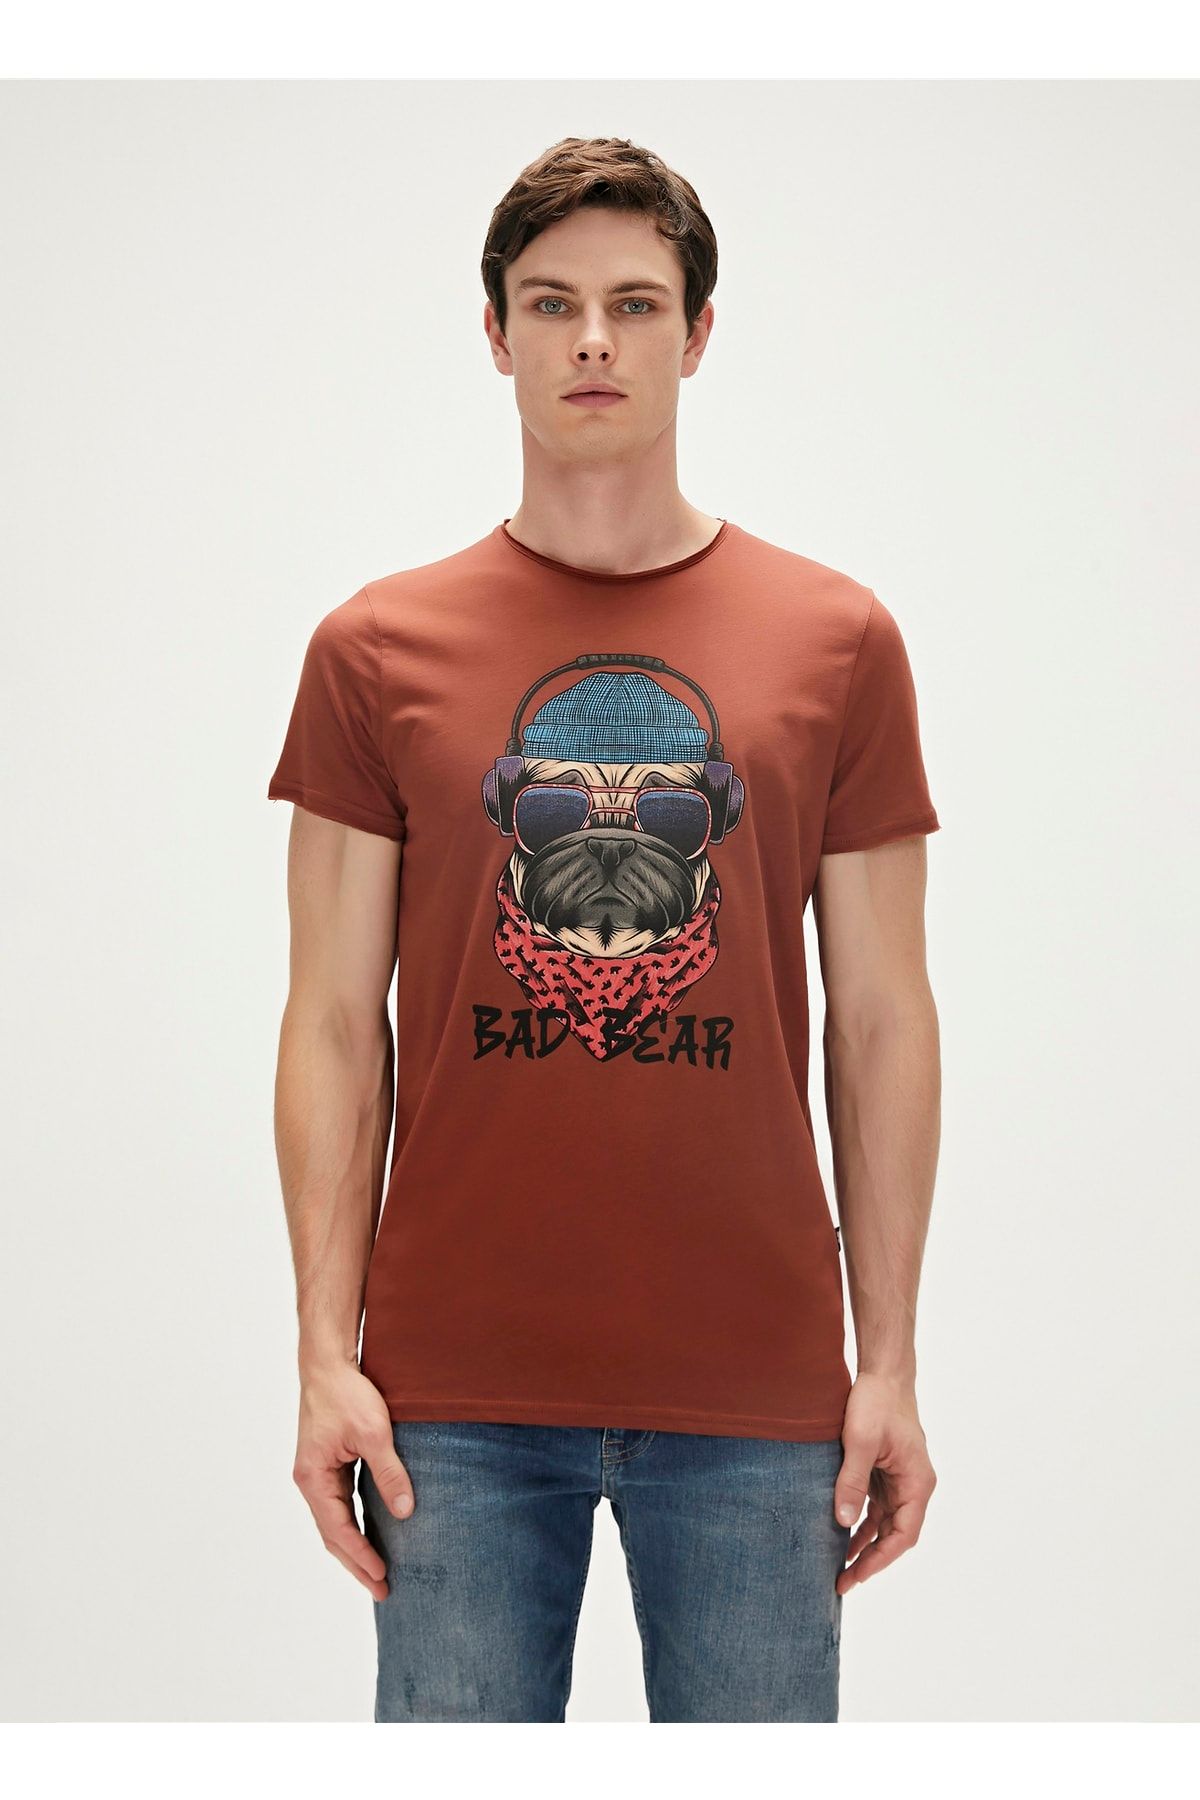 Bad Bear Baskılı Kahve Erkek T-shirt 23.01.07.010_reckless T-shırt